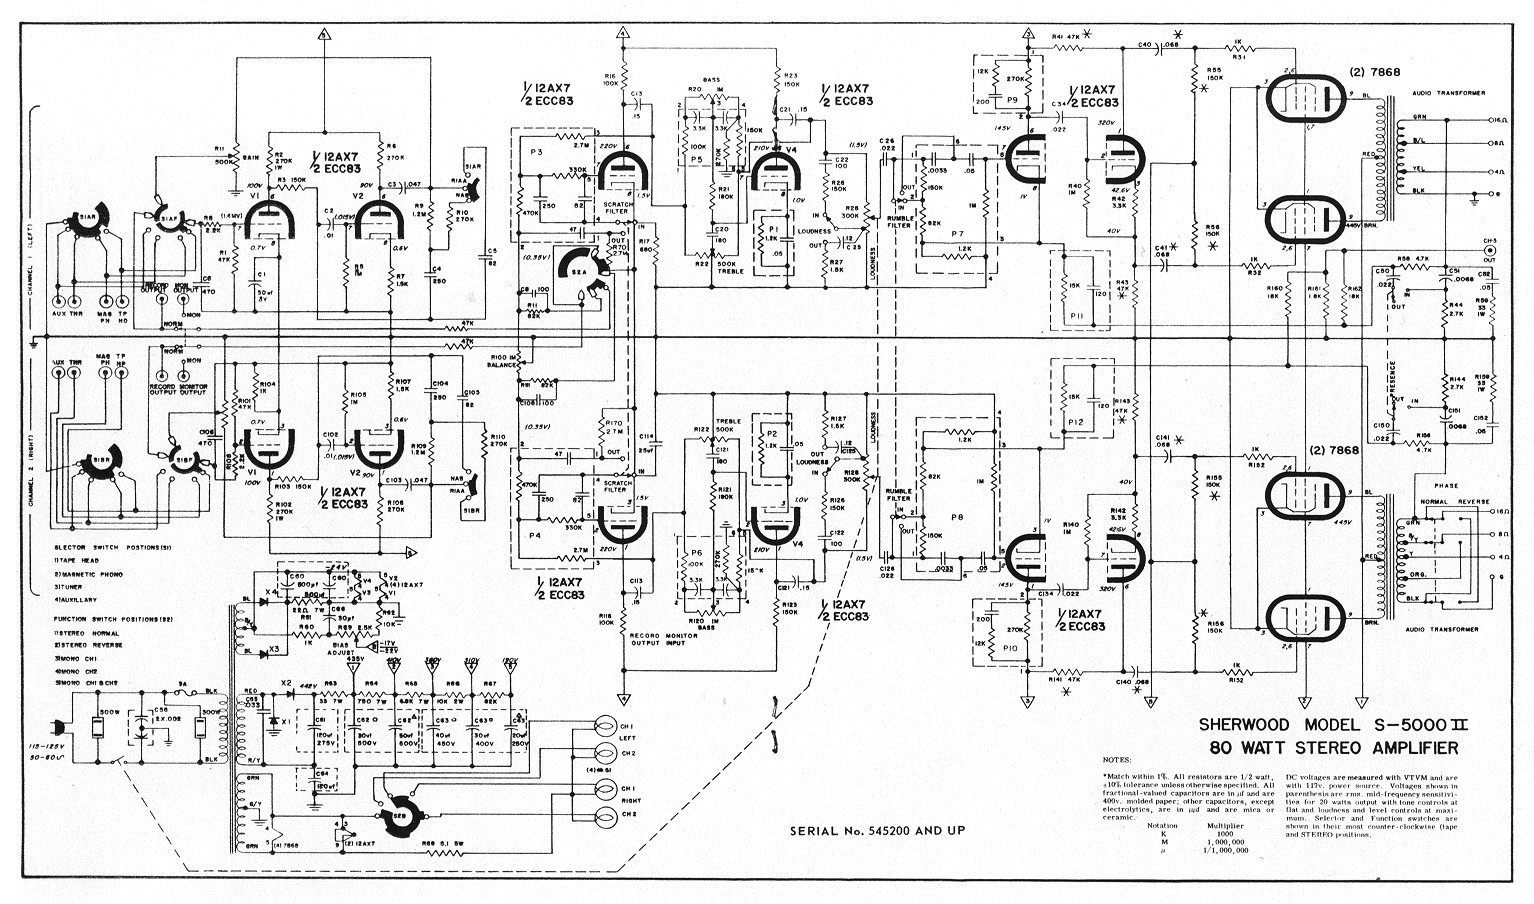 Sherwood S-5000 II Schematic.pdf